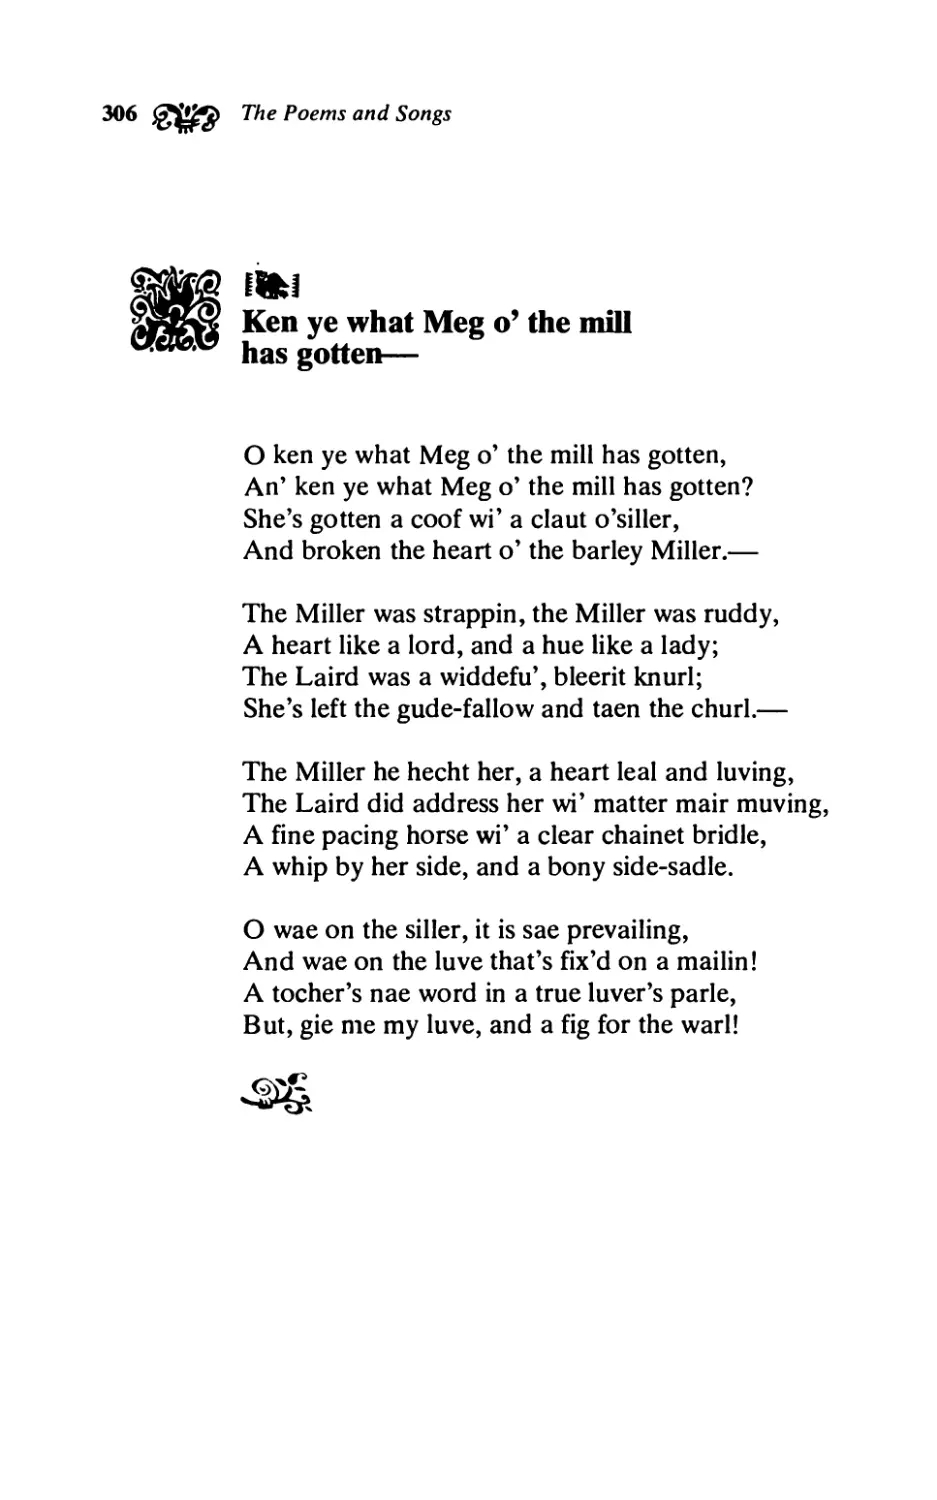 Ken ye what Meg о’ the mill has gotten-